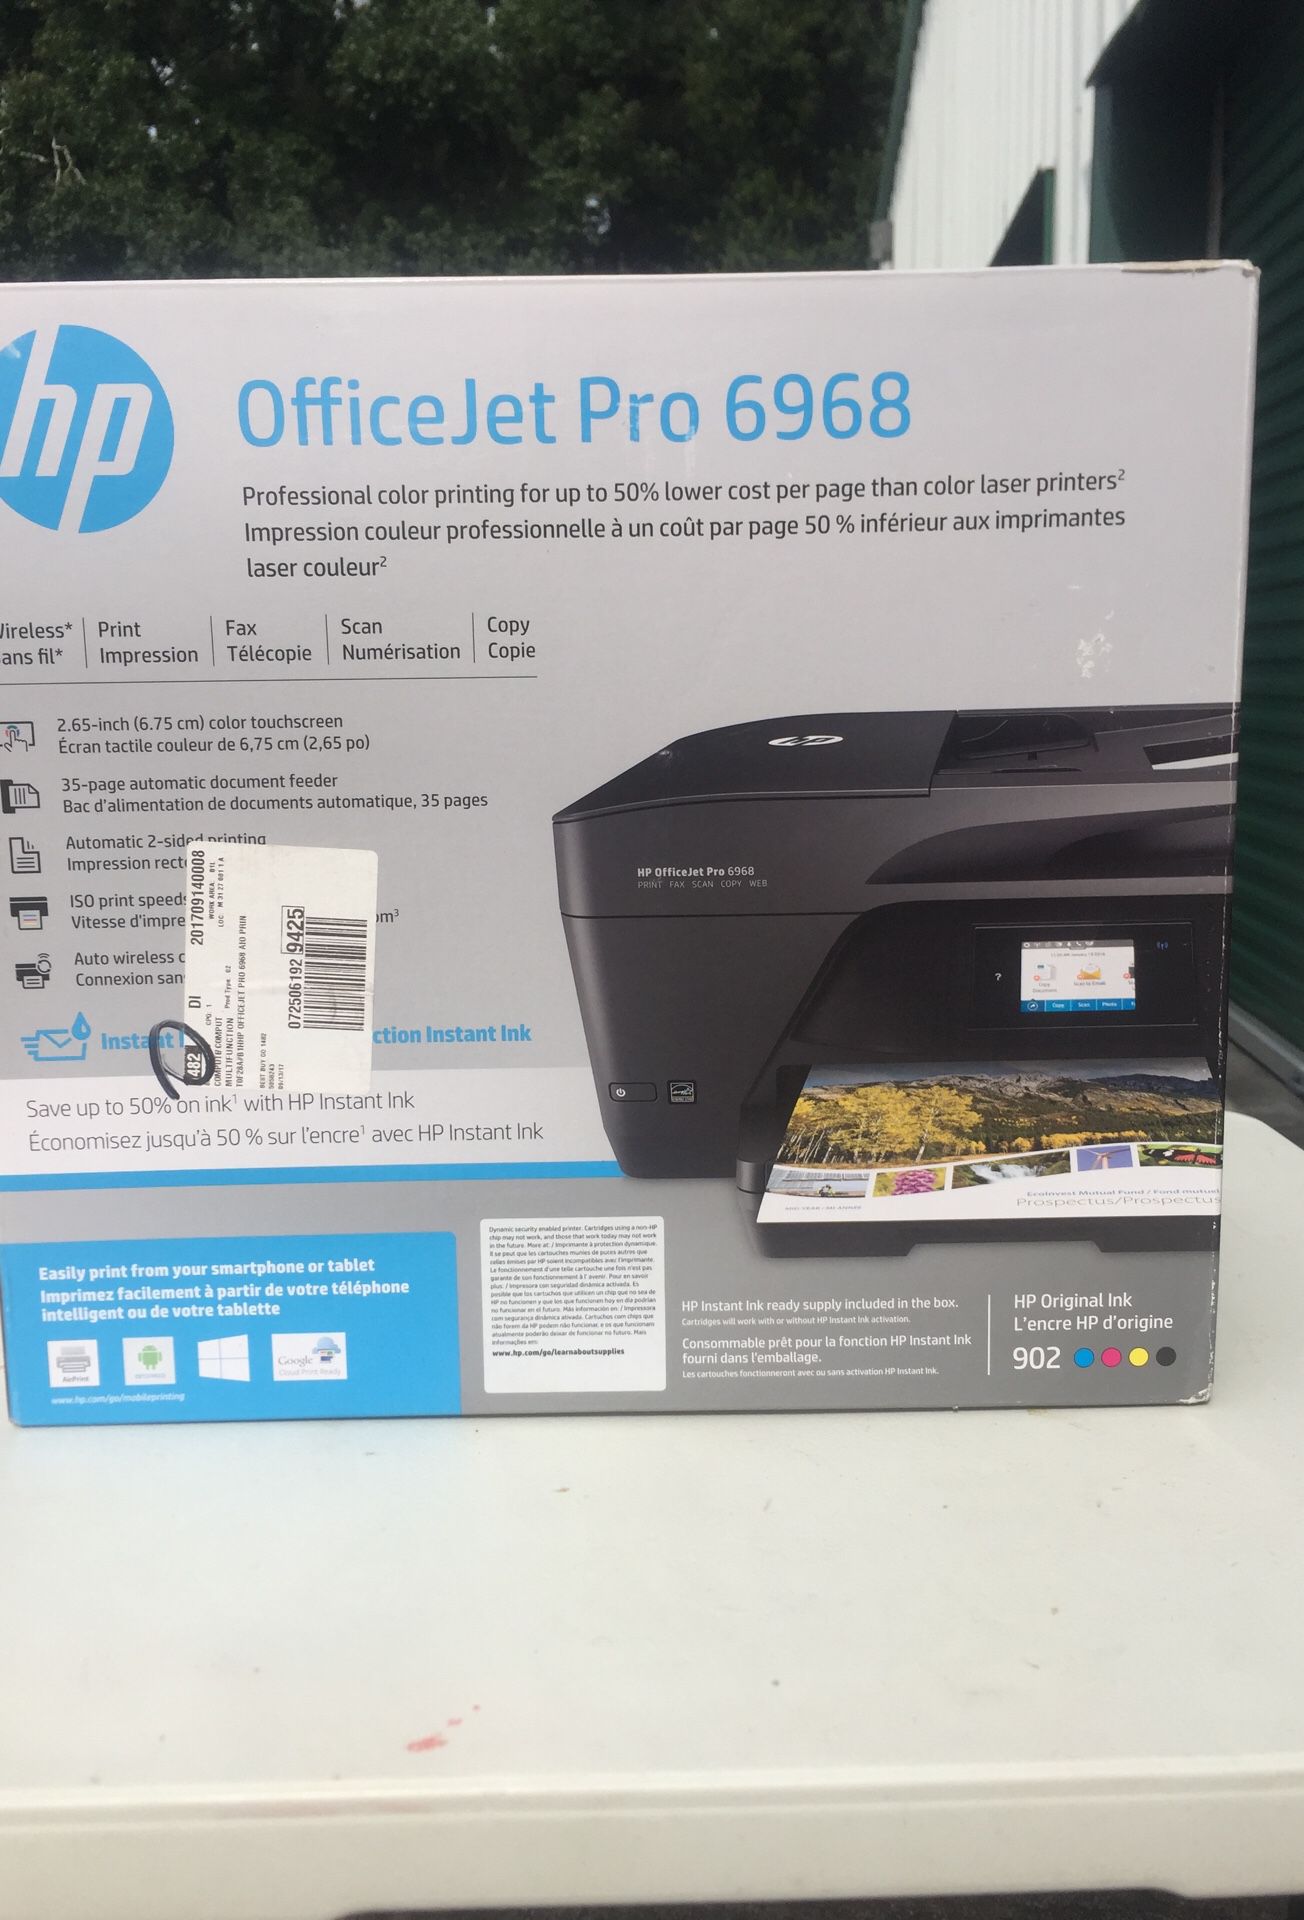 HP office jet pro printer